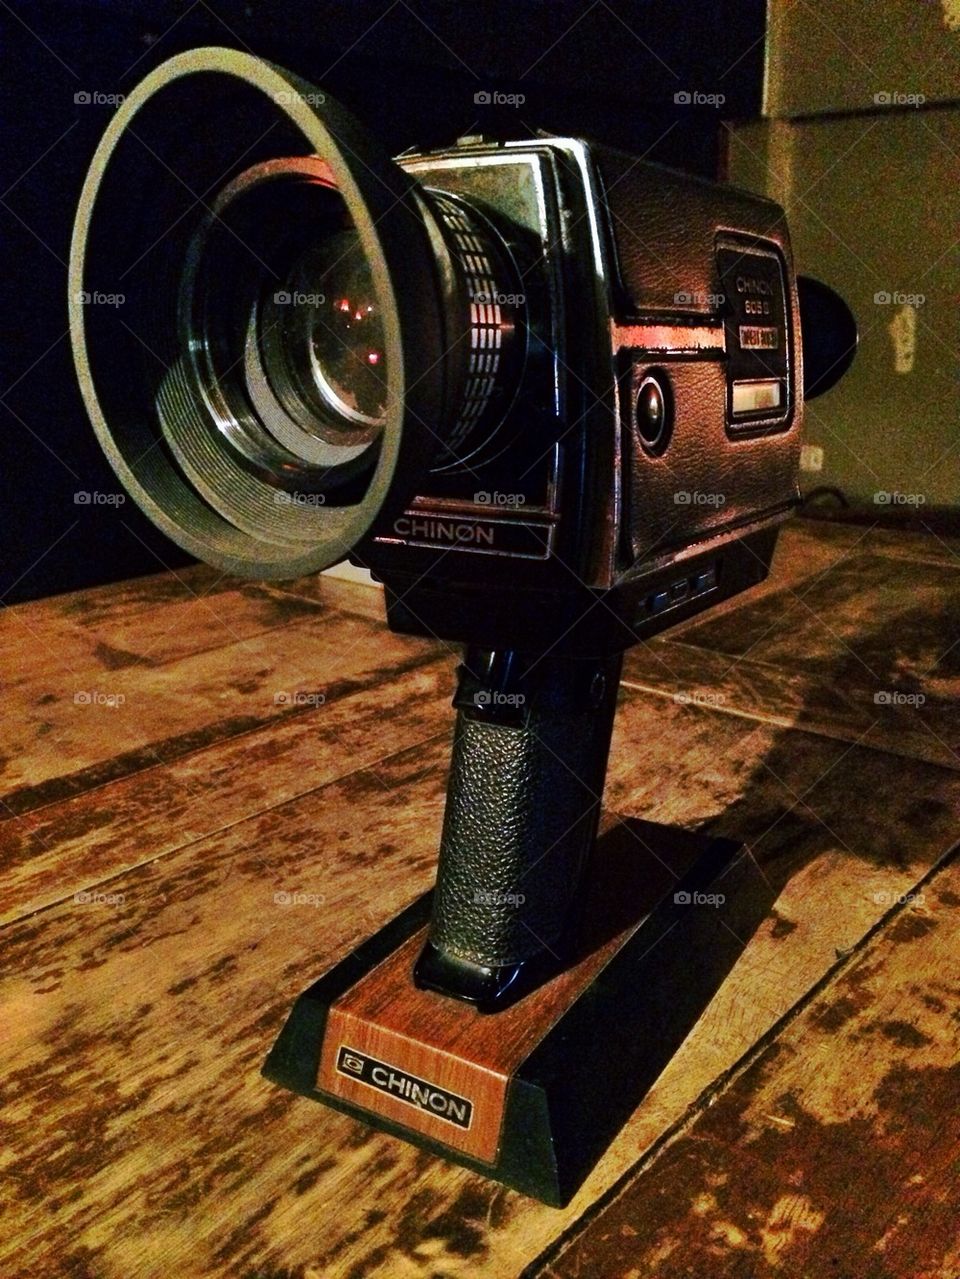 Chinon 605s Old camera